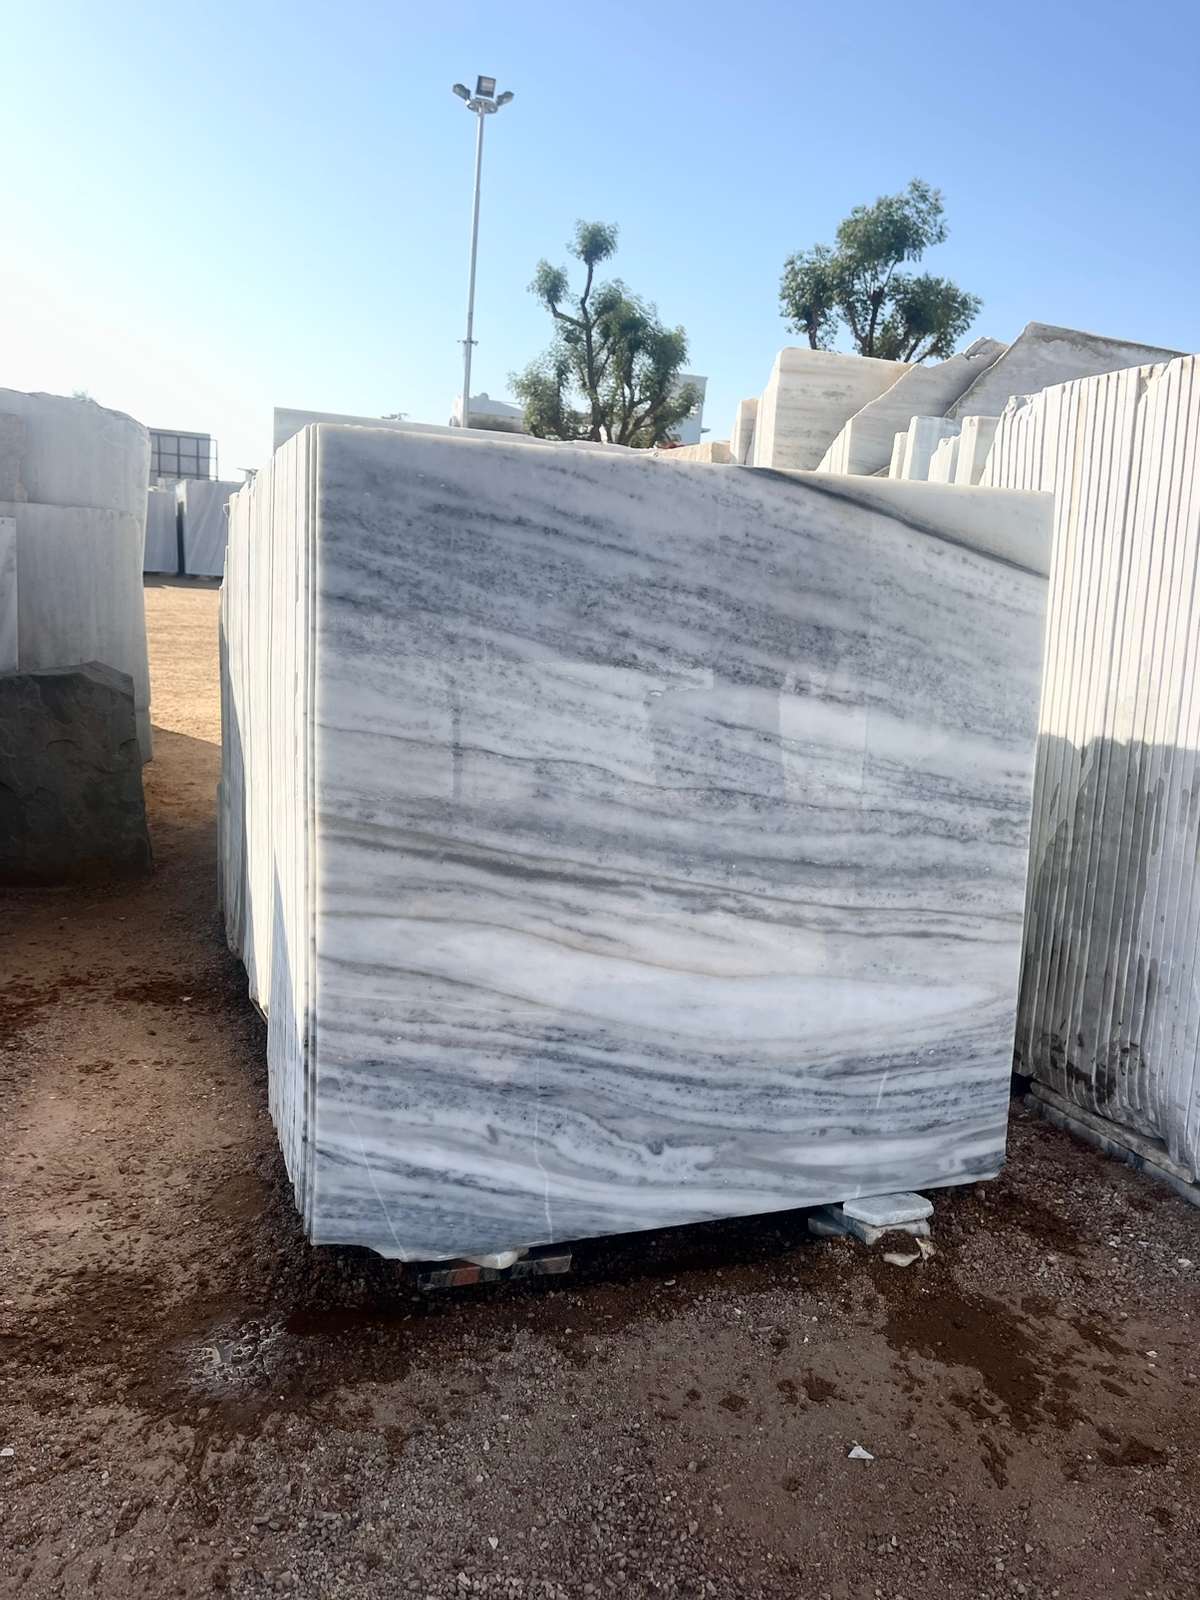 makrana chak dungri marble